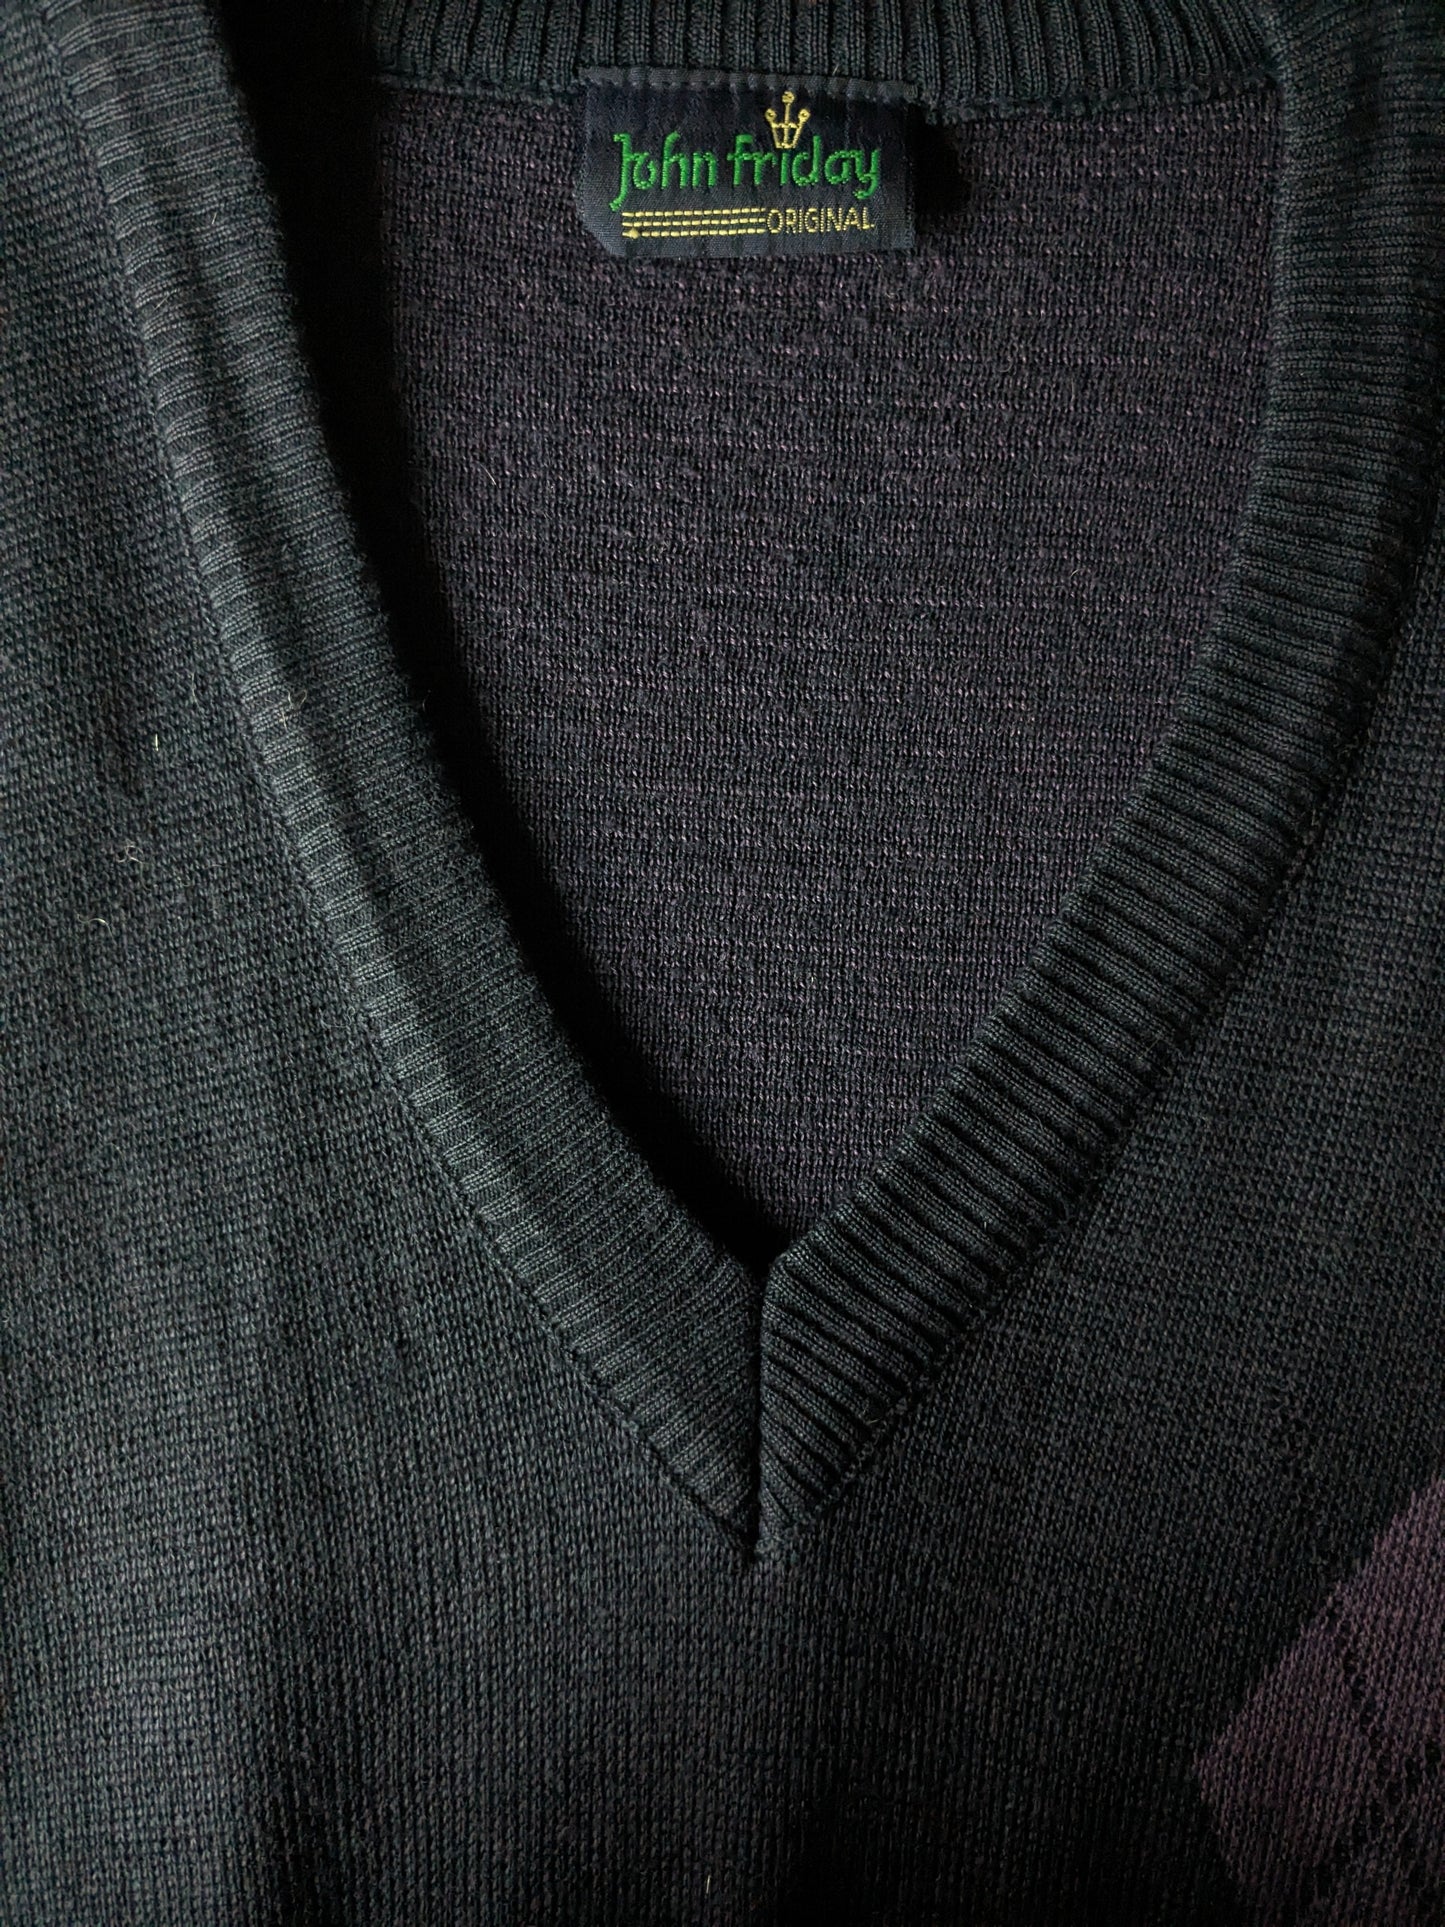 Vintage John Friday Spencer. Purple scuro colorato. Taglia S. 50% lana.